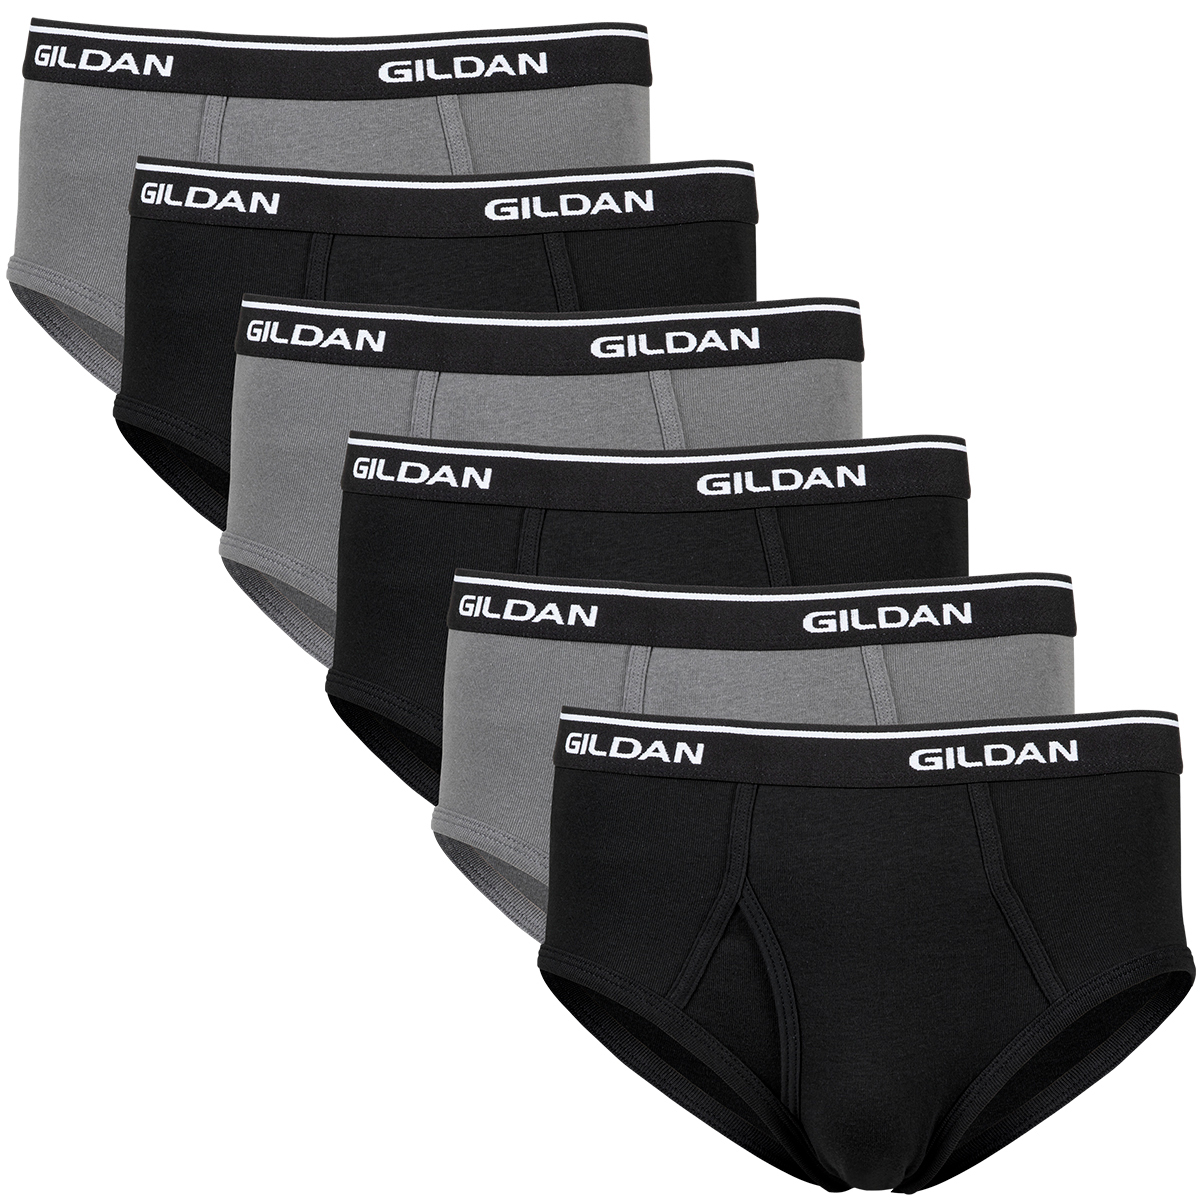 Mens Gildan(R) 6pk. Select Classic Briefs - Black/Grey